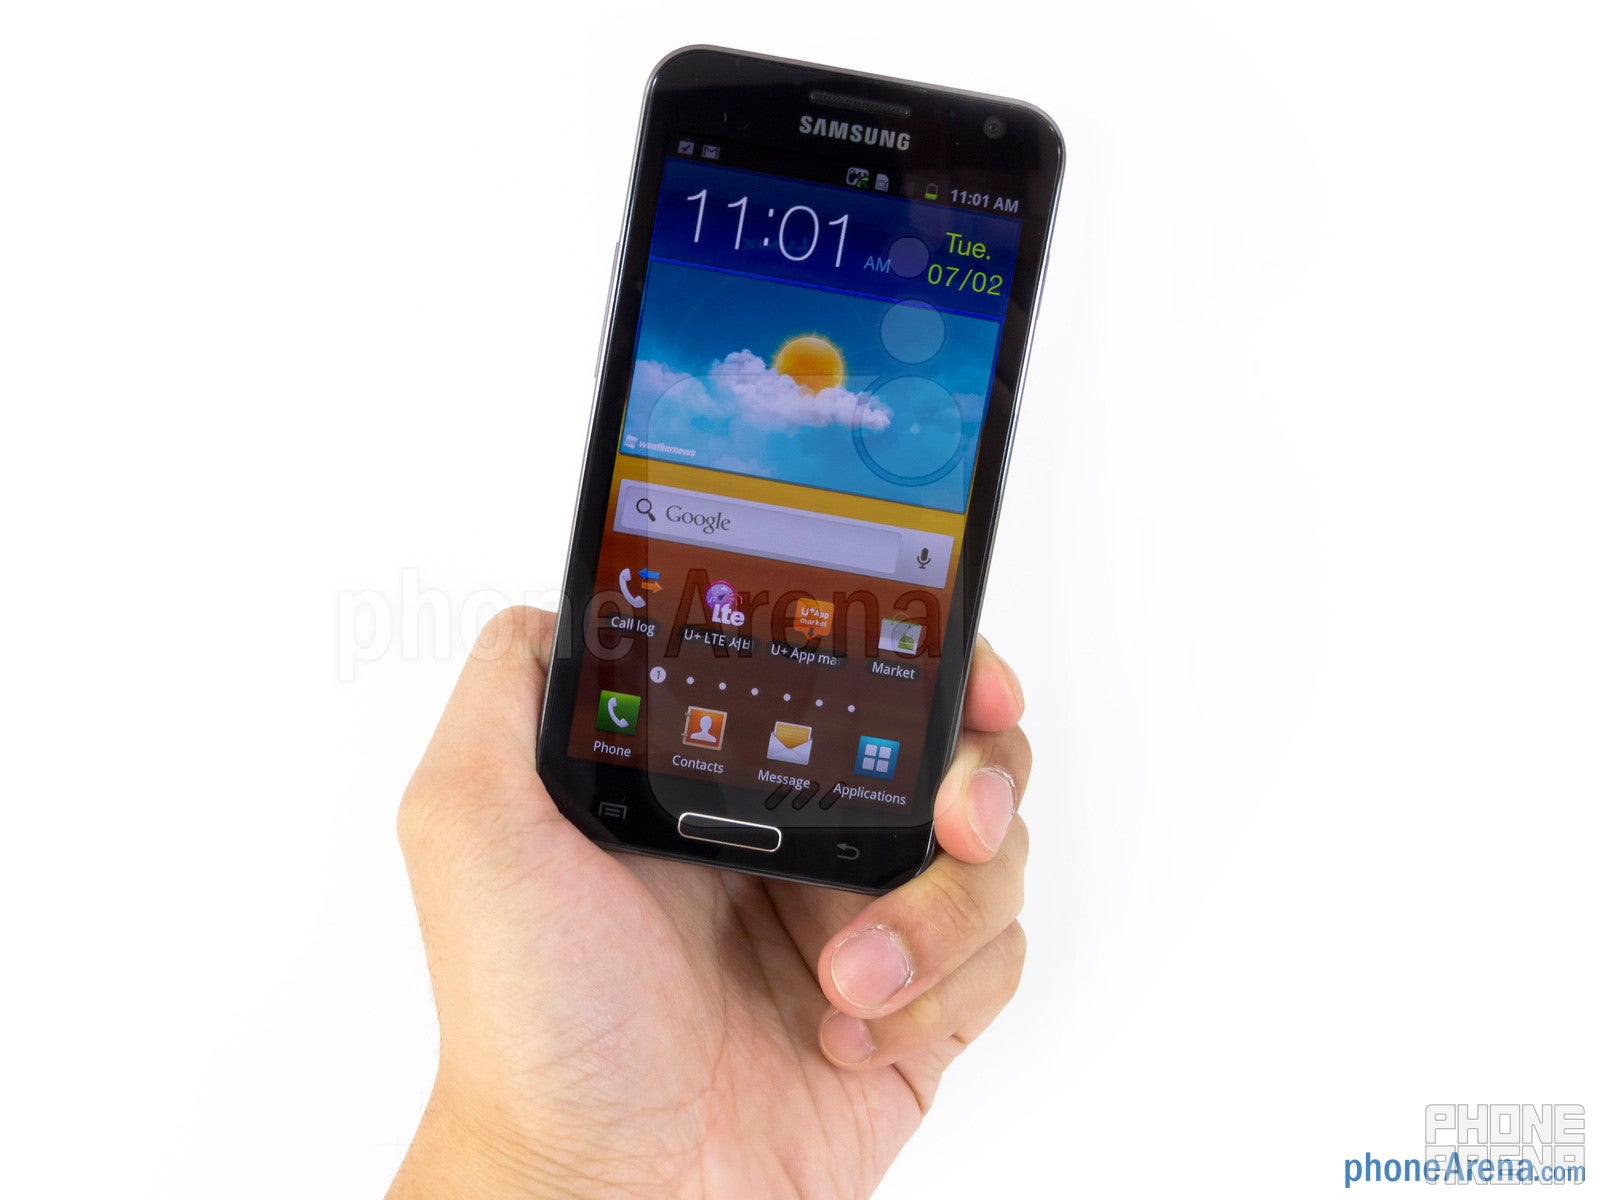 Samsung Galaxy S II HD LTE Review